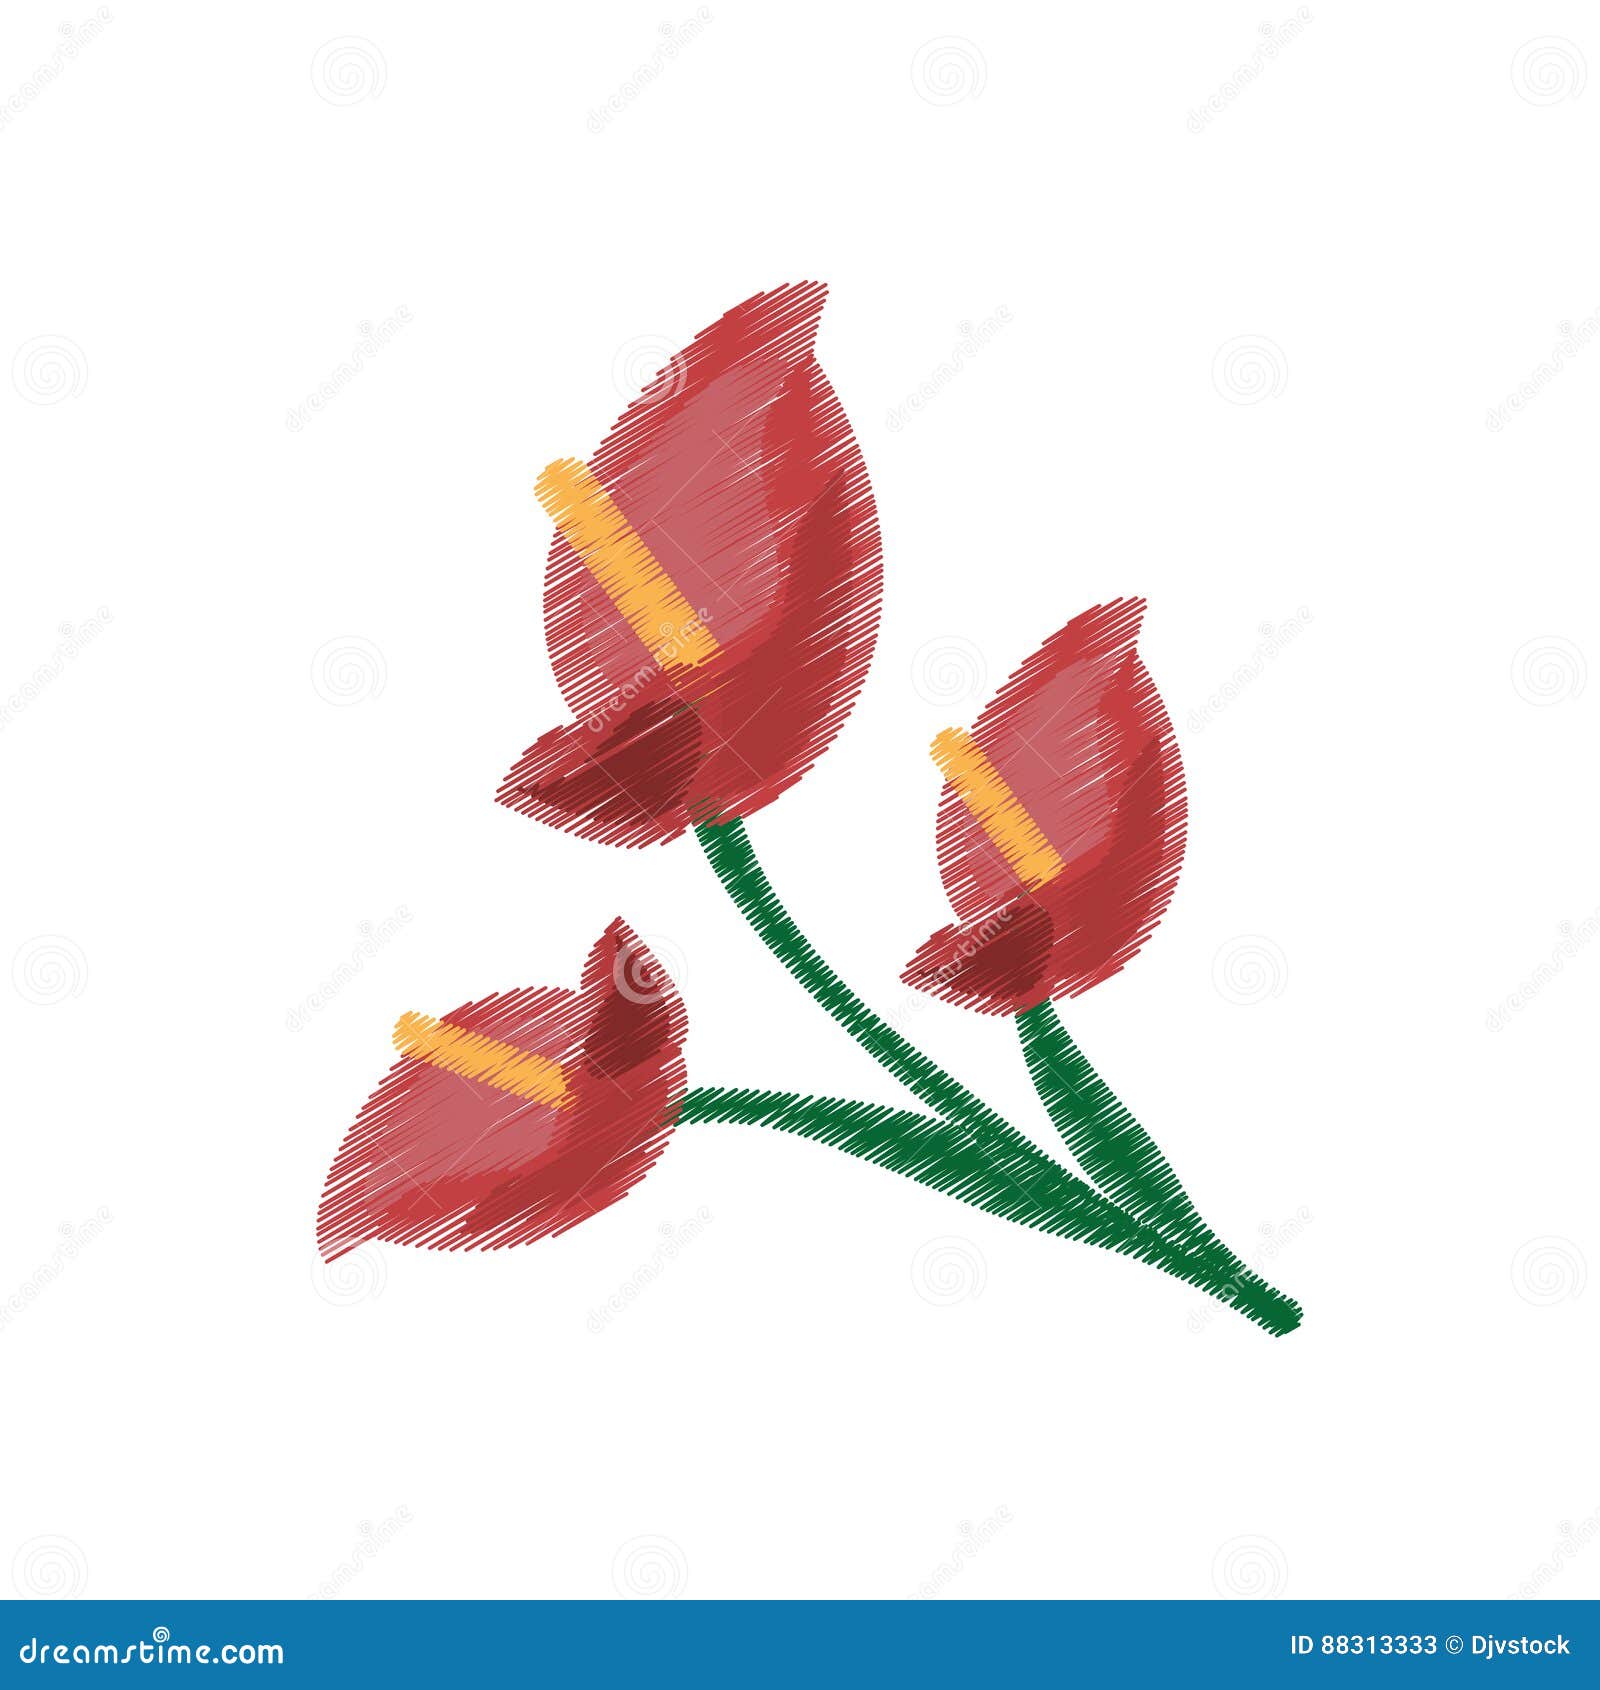 drawing anthurium flower ornament image